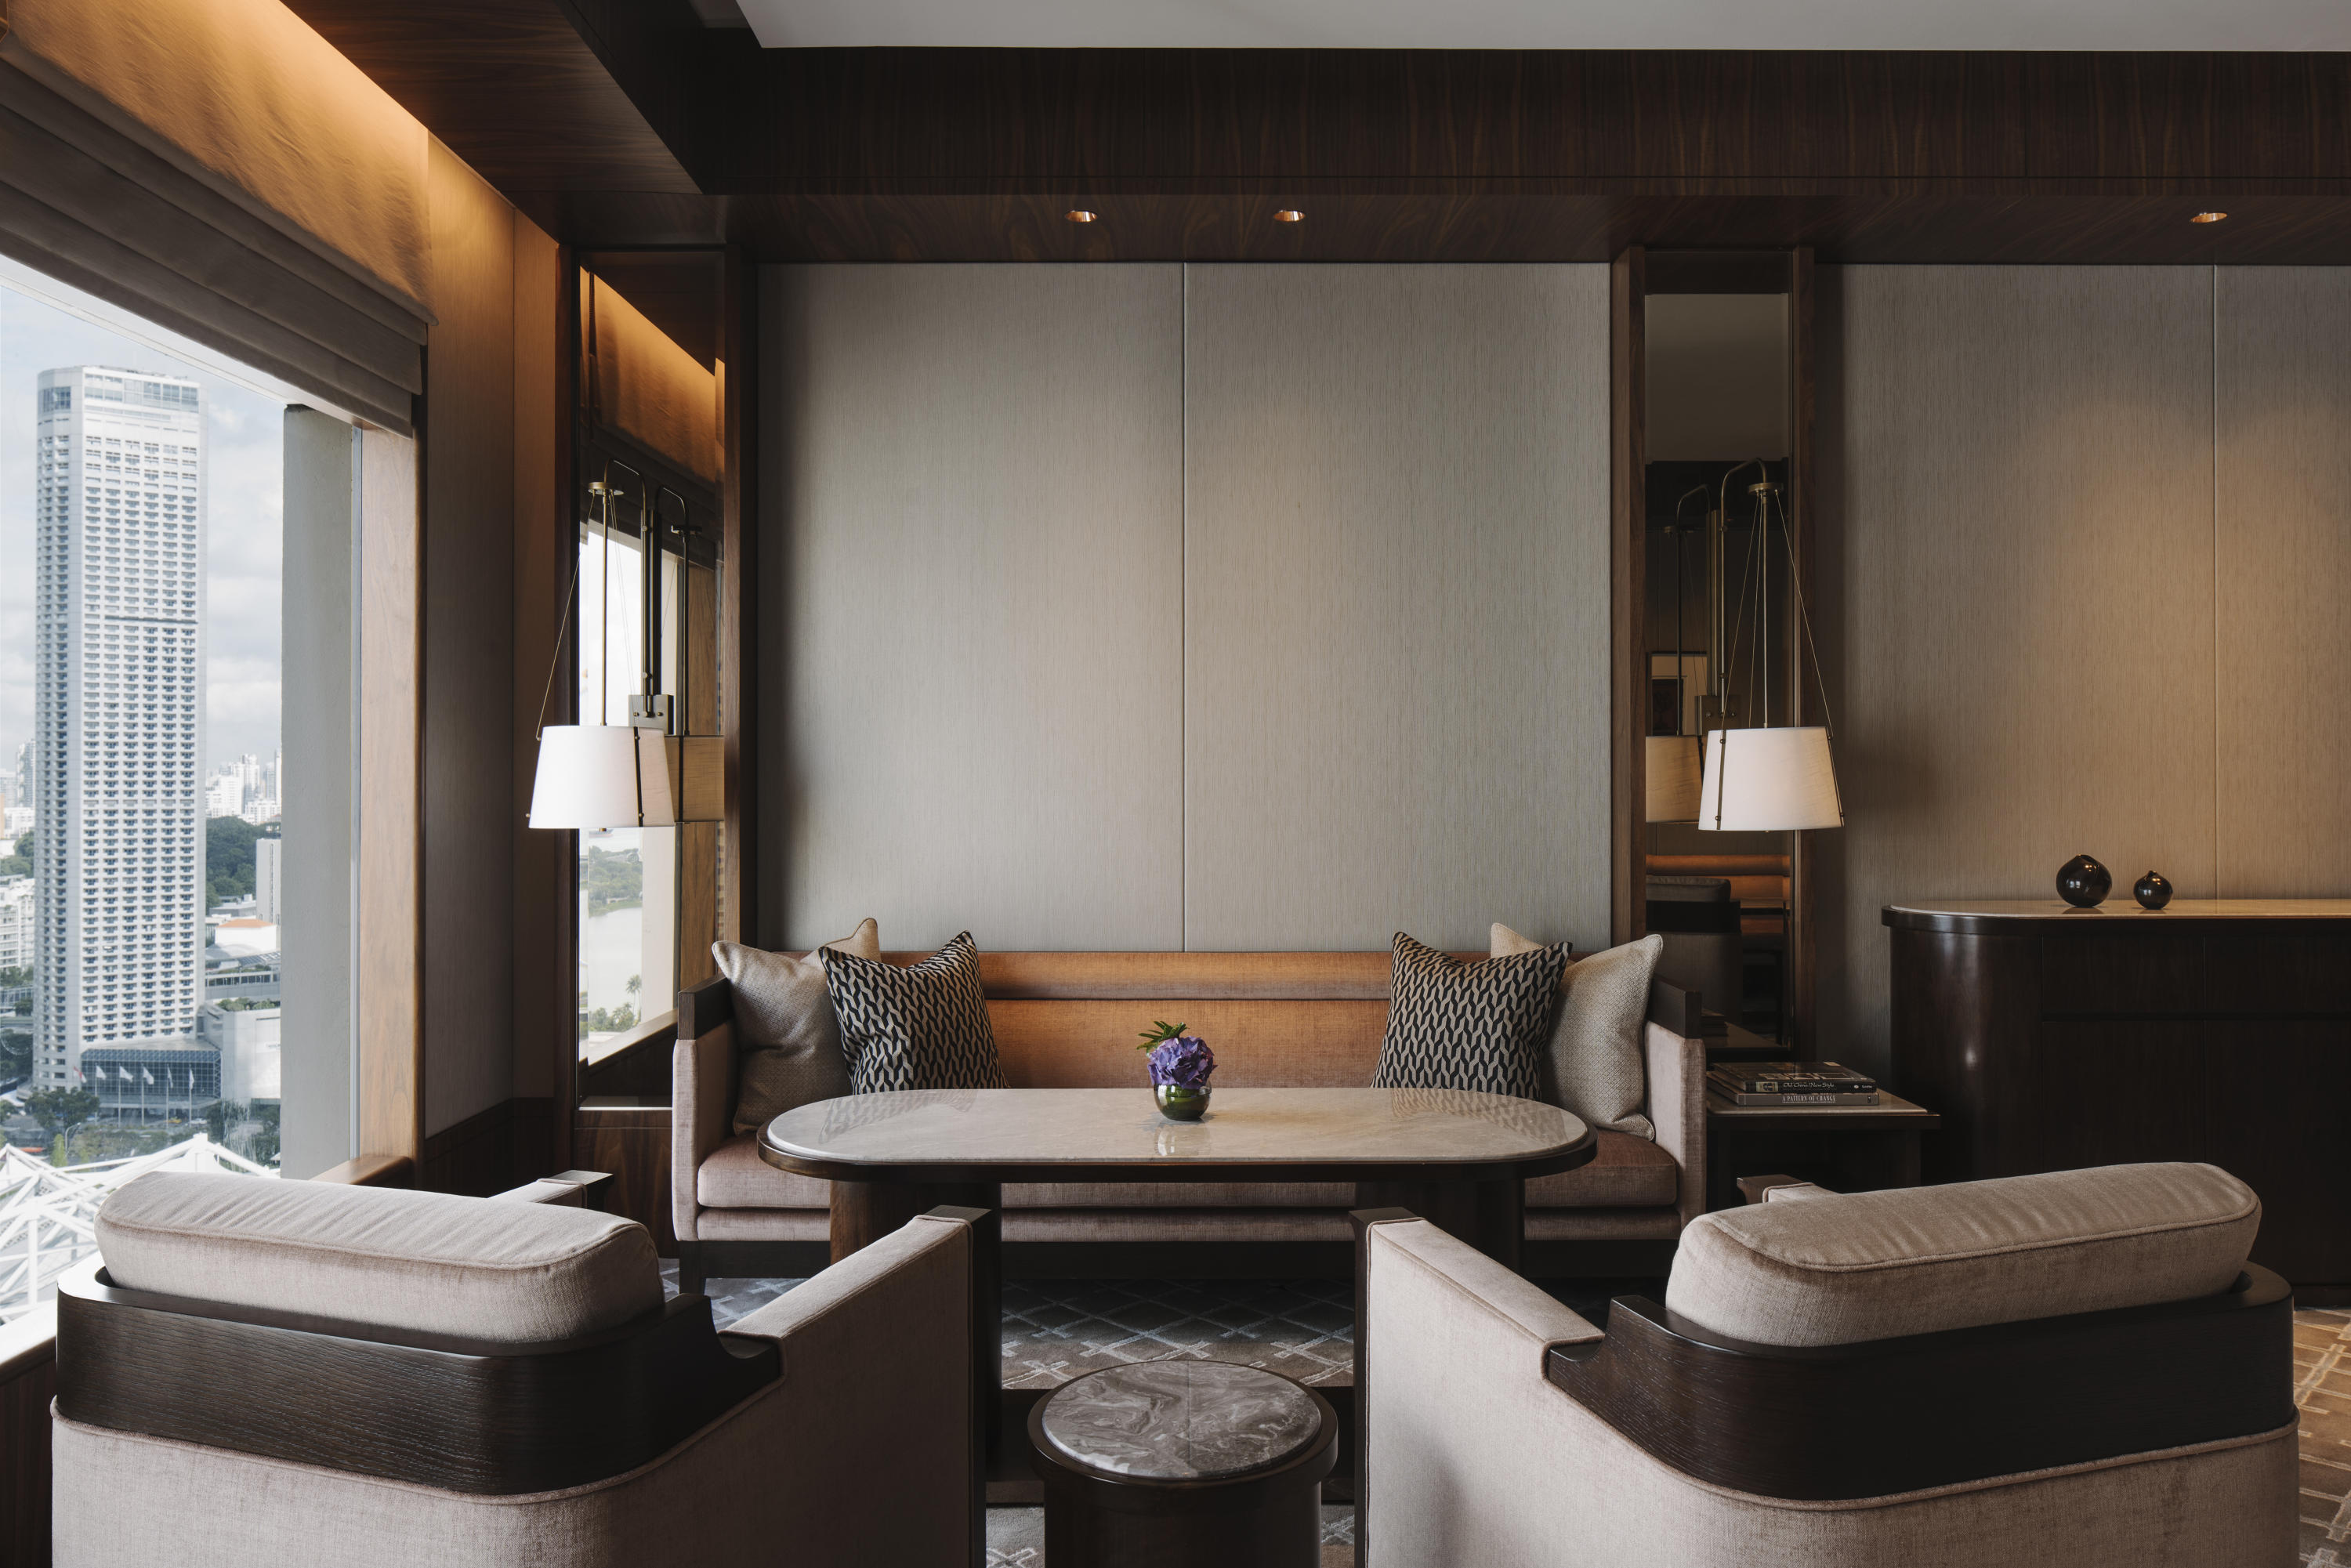 Executive Lounge, Conrad Hotel by Brewin Design Office | Hotel interiors